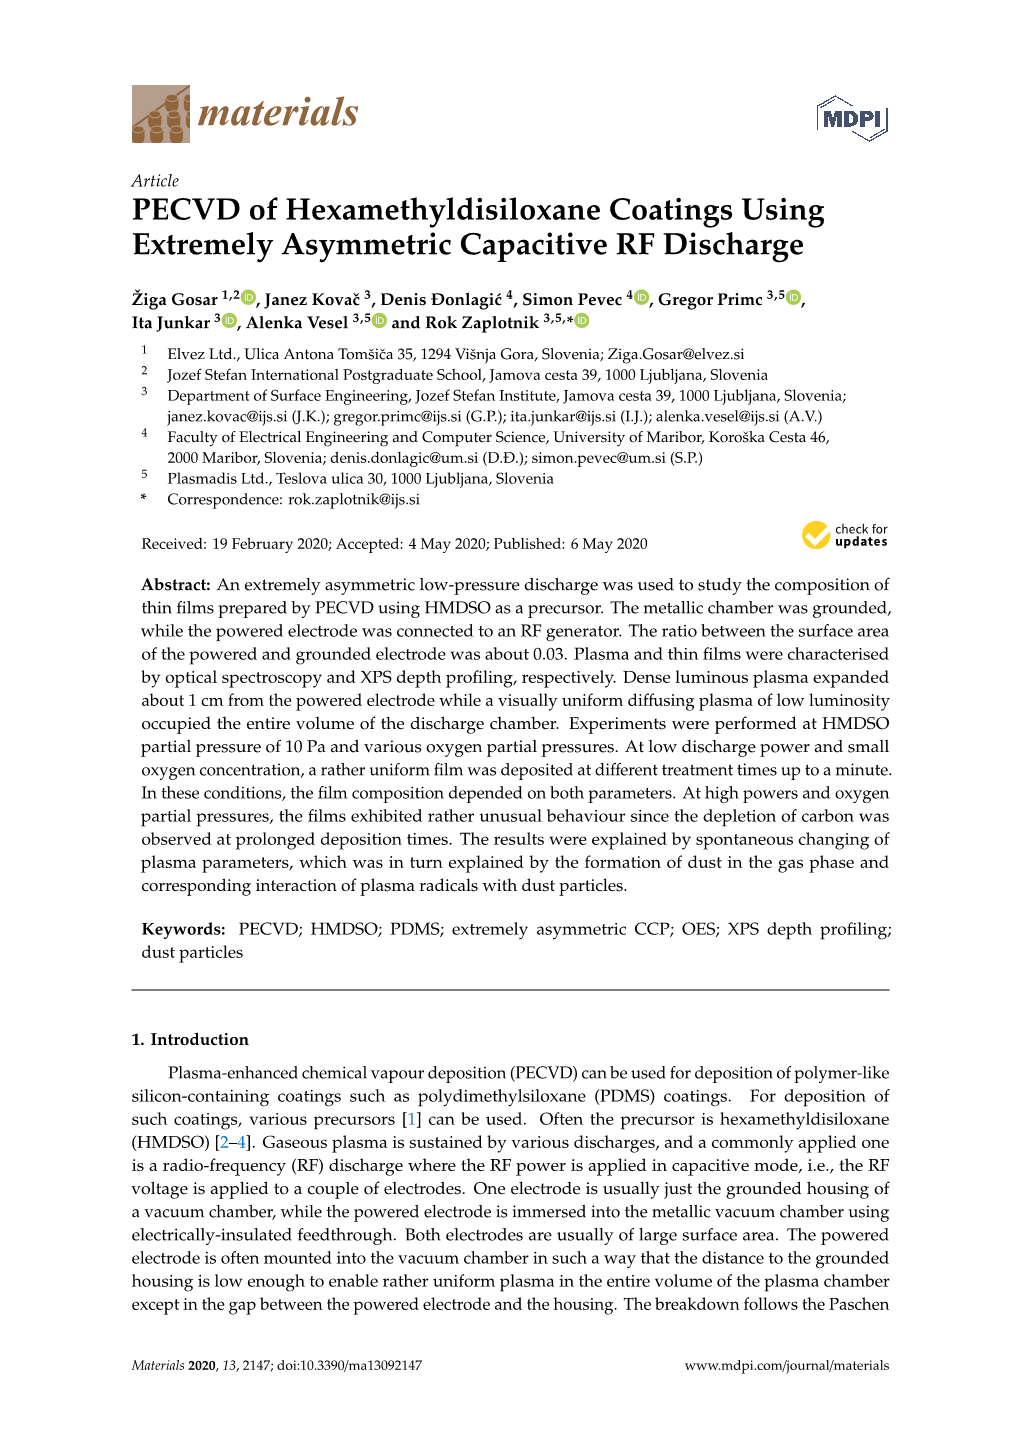 PECVD of Hexamethyldisiloxane Coatings Using Extremely Asymmetric Capacitive RF Discharge